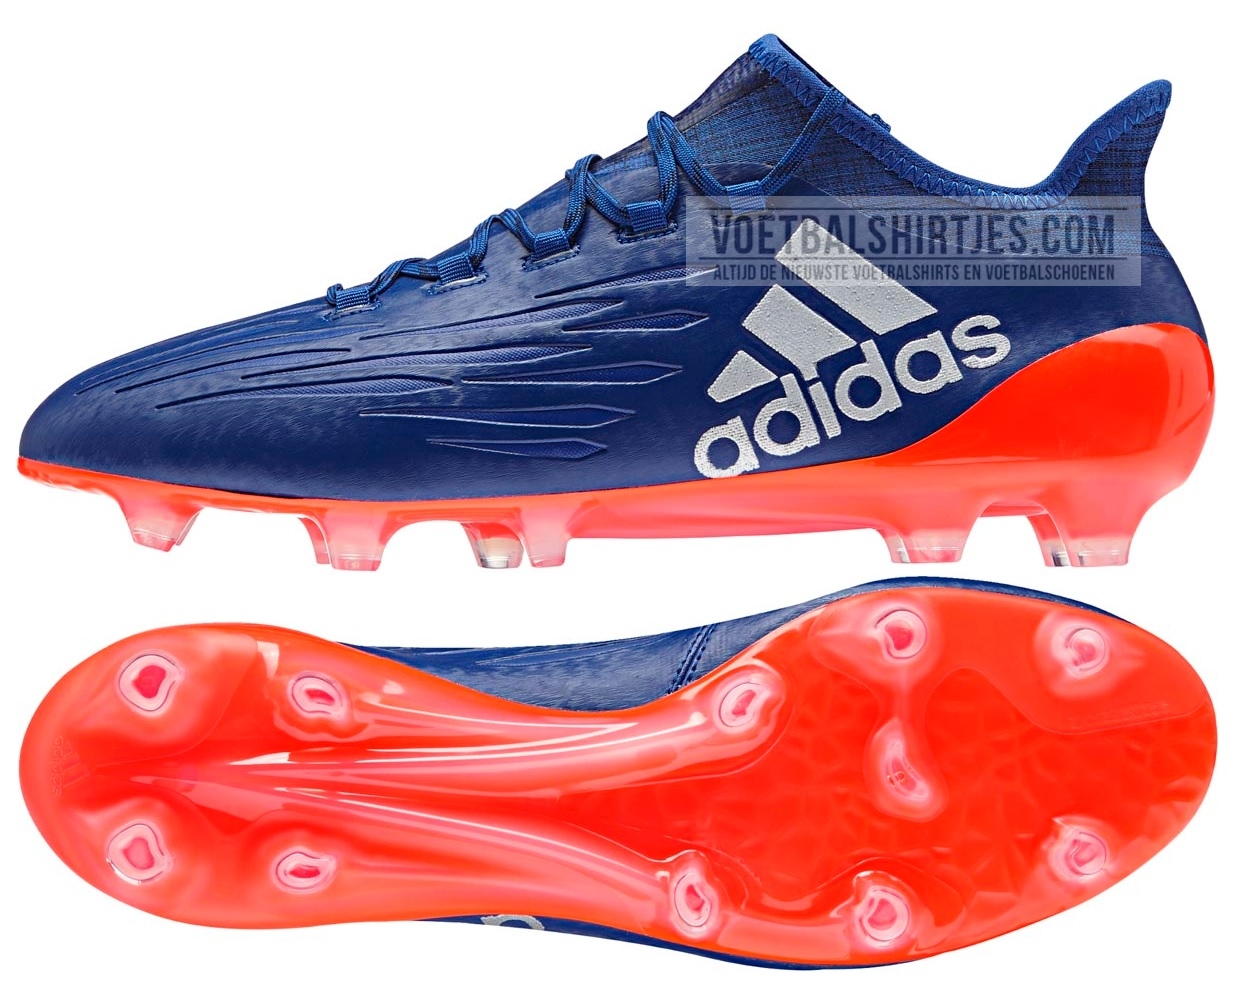 Namaak Shilling plus Adidas X 16.1 blue - Adidas X 16 voetbalschoenen kopen. X16